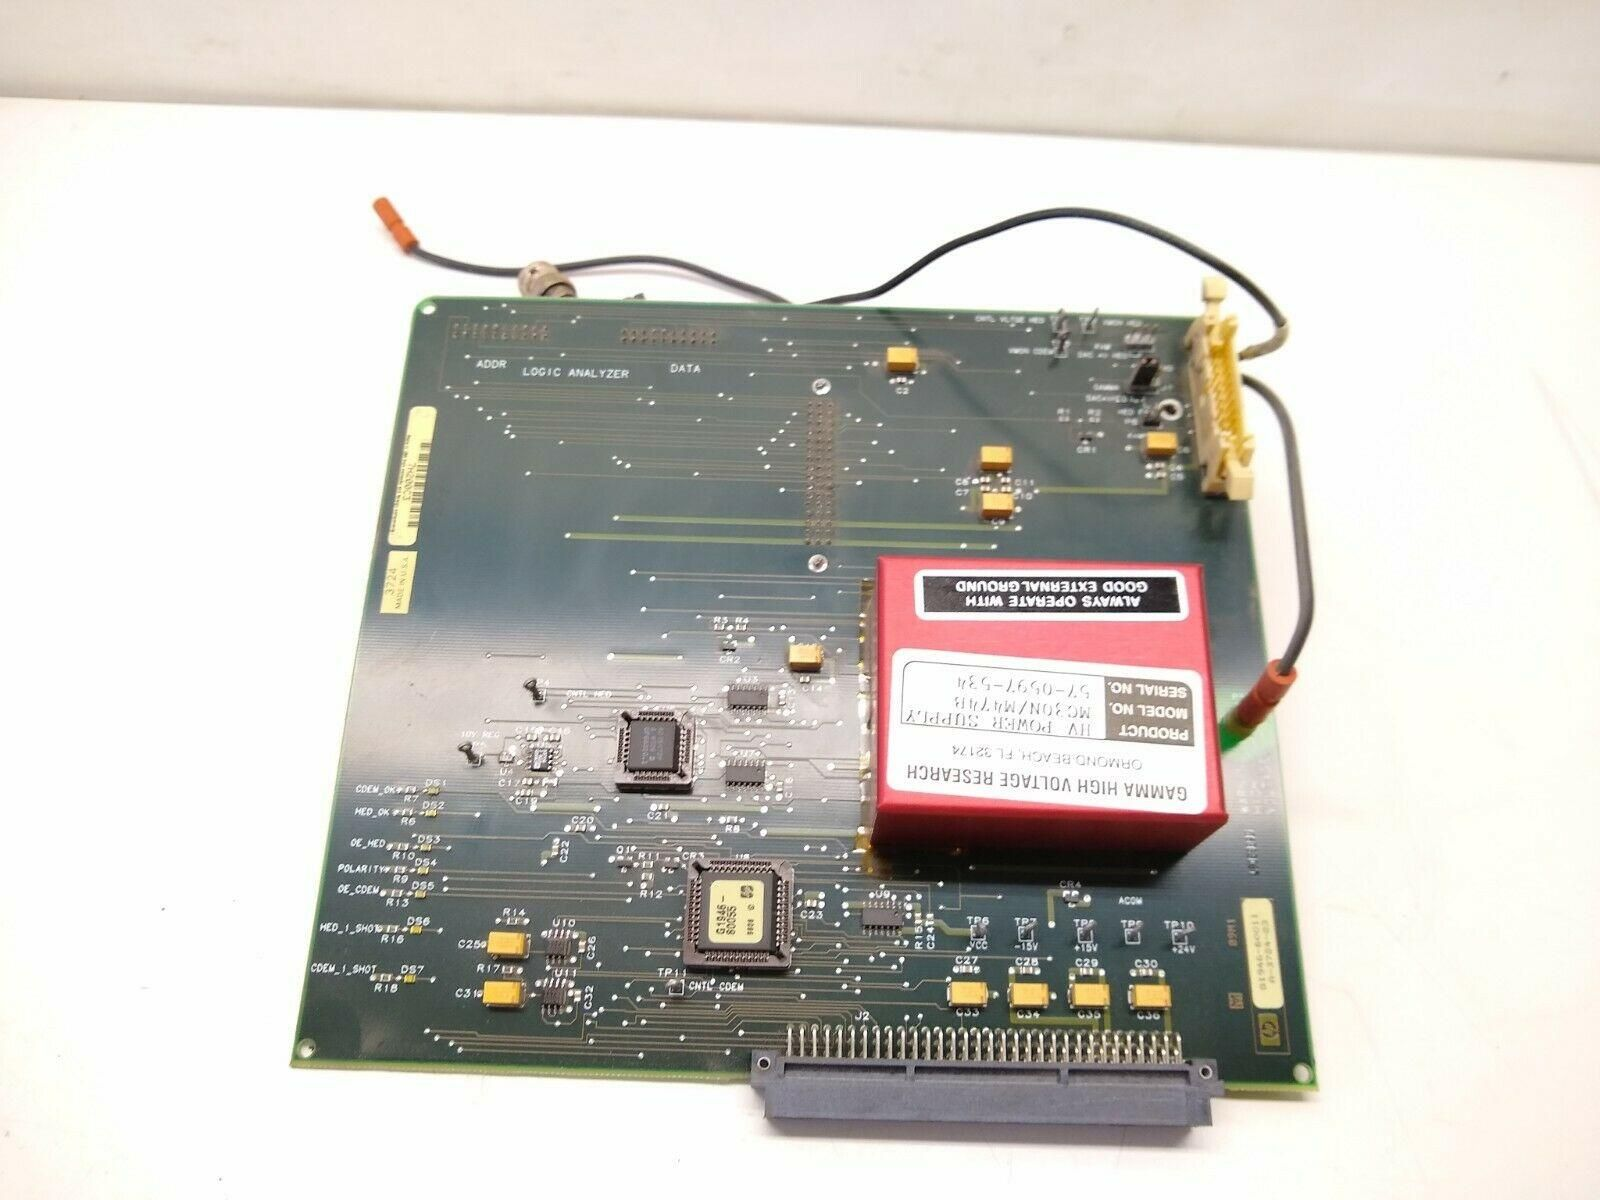 Agilent 1100 Series G1946-60011 PCB, HPLC, MS